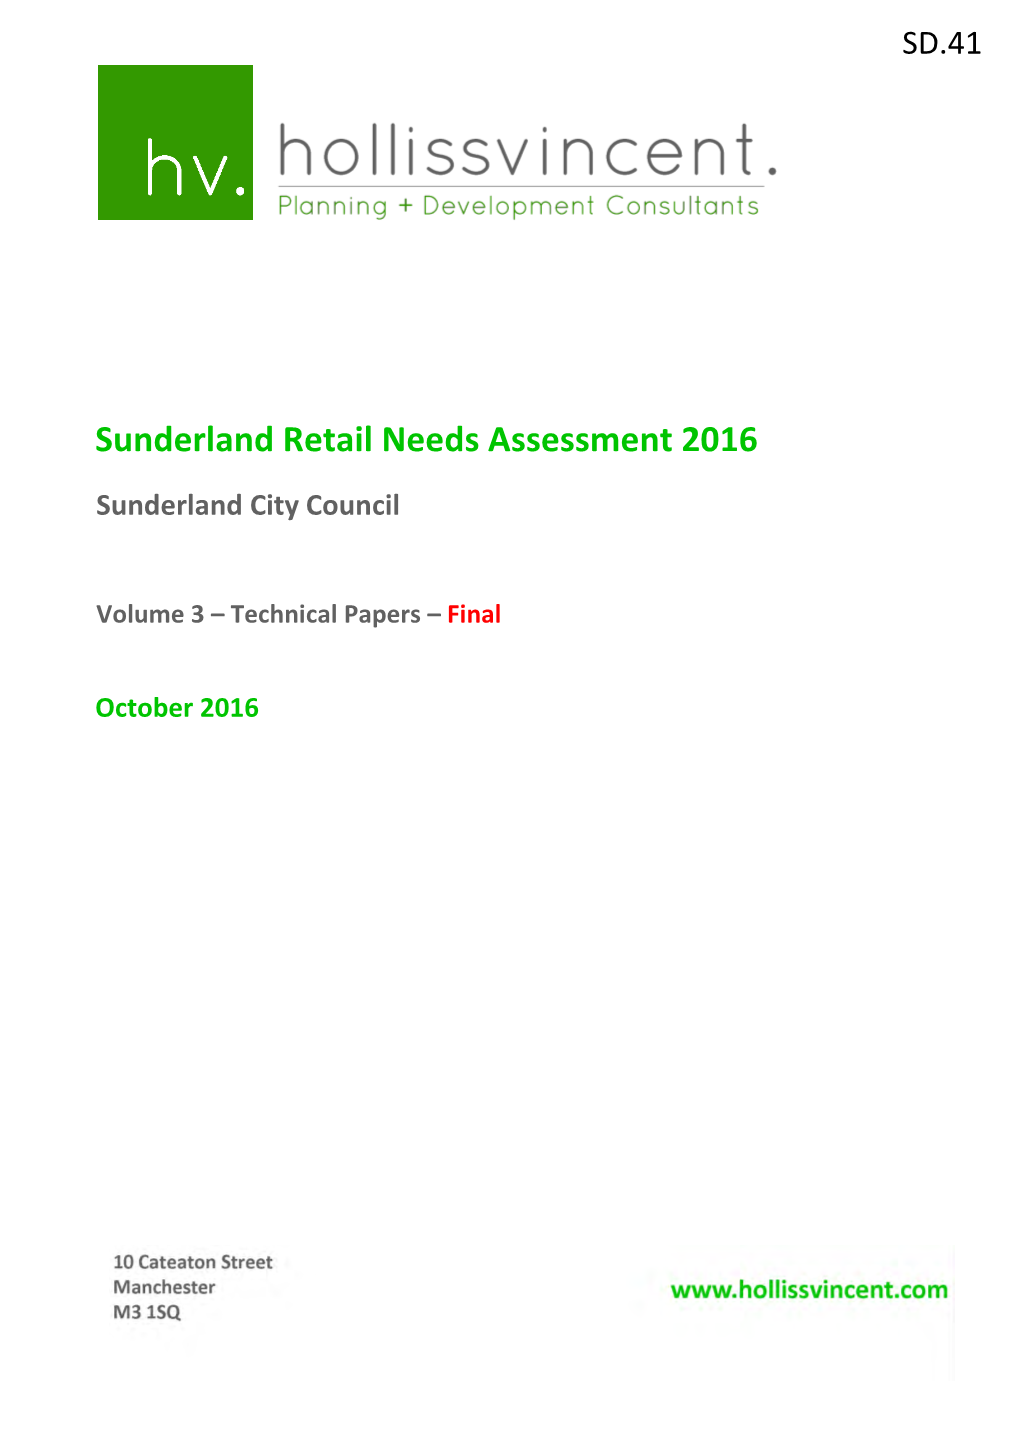 Sunderland Retail Needs Assessment 2016